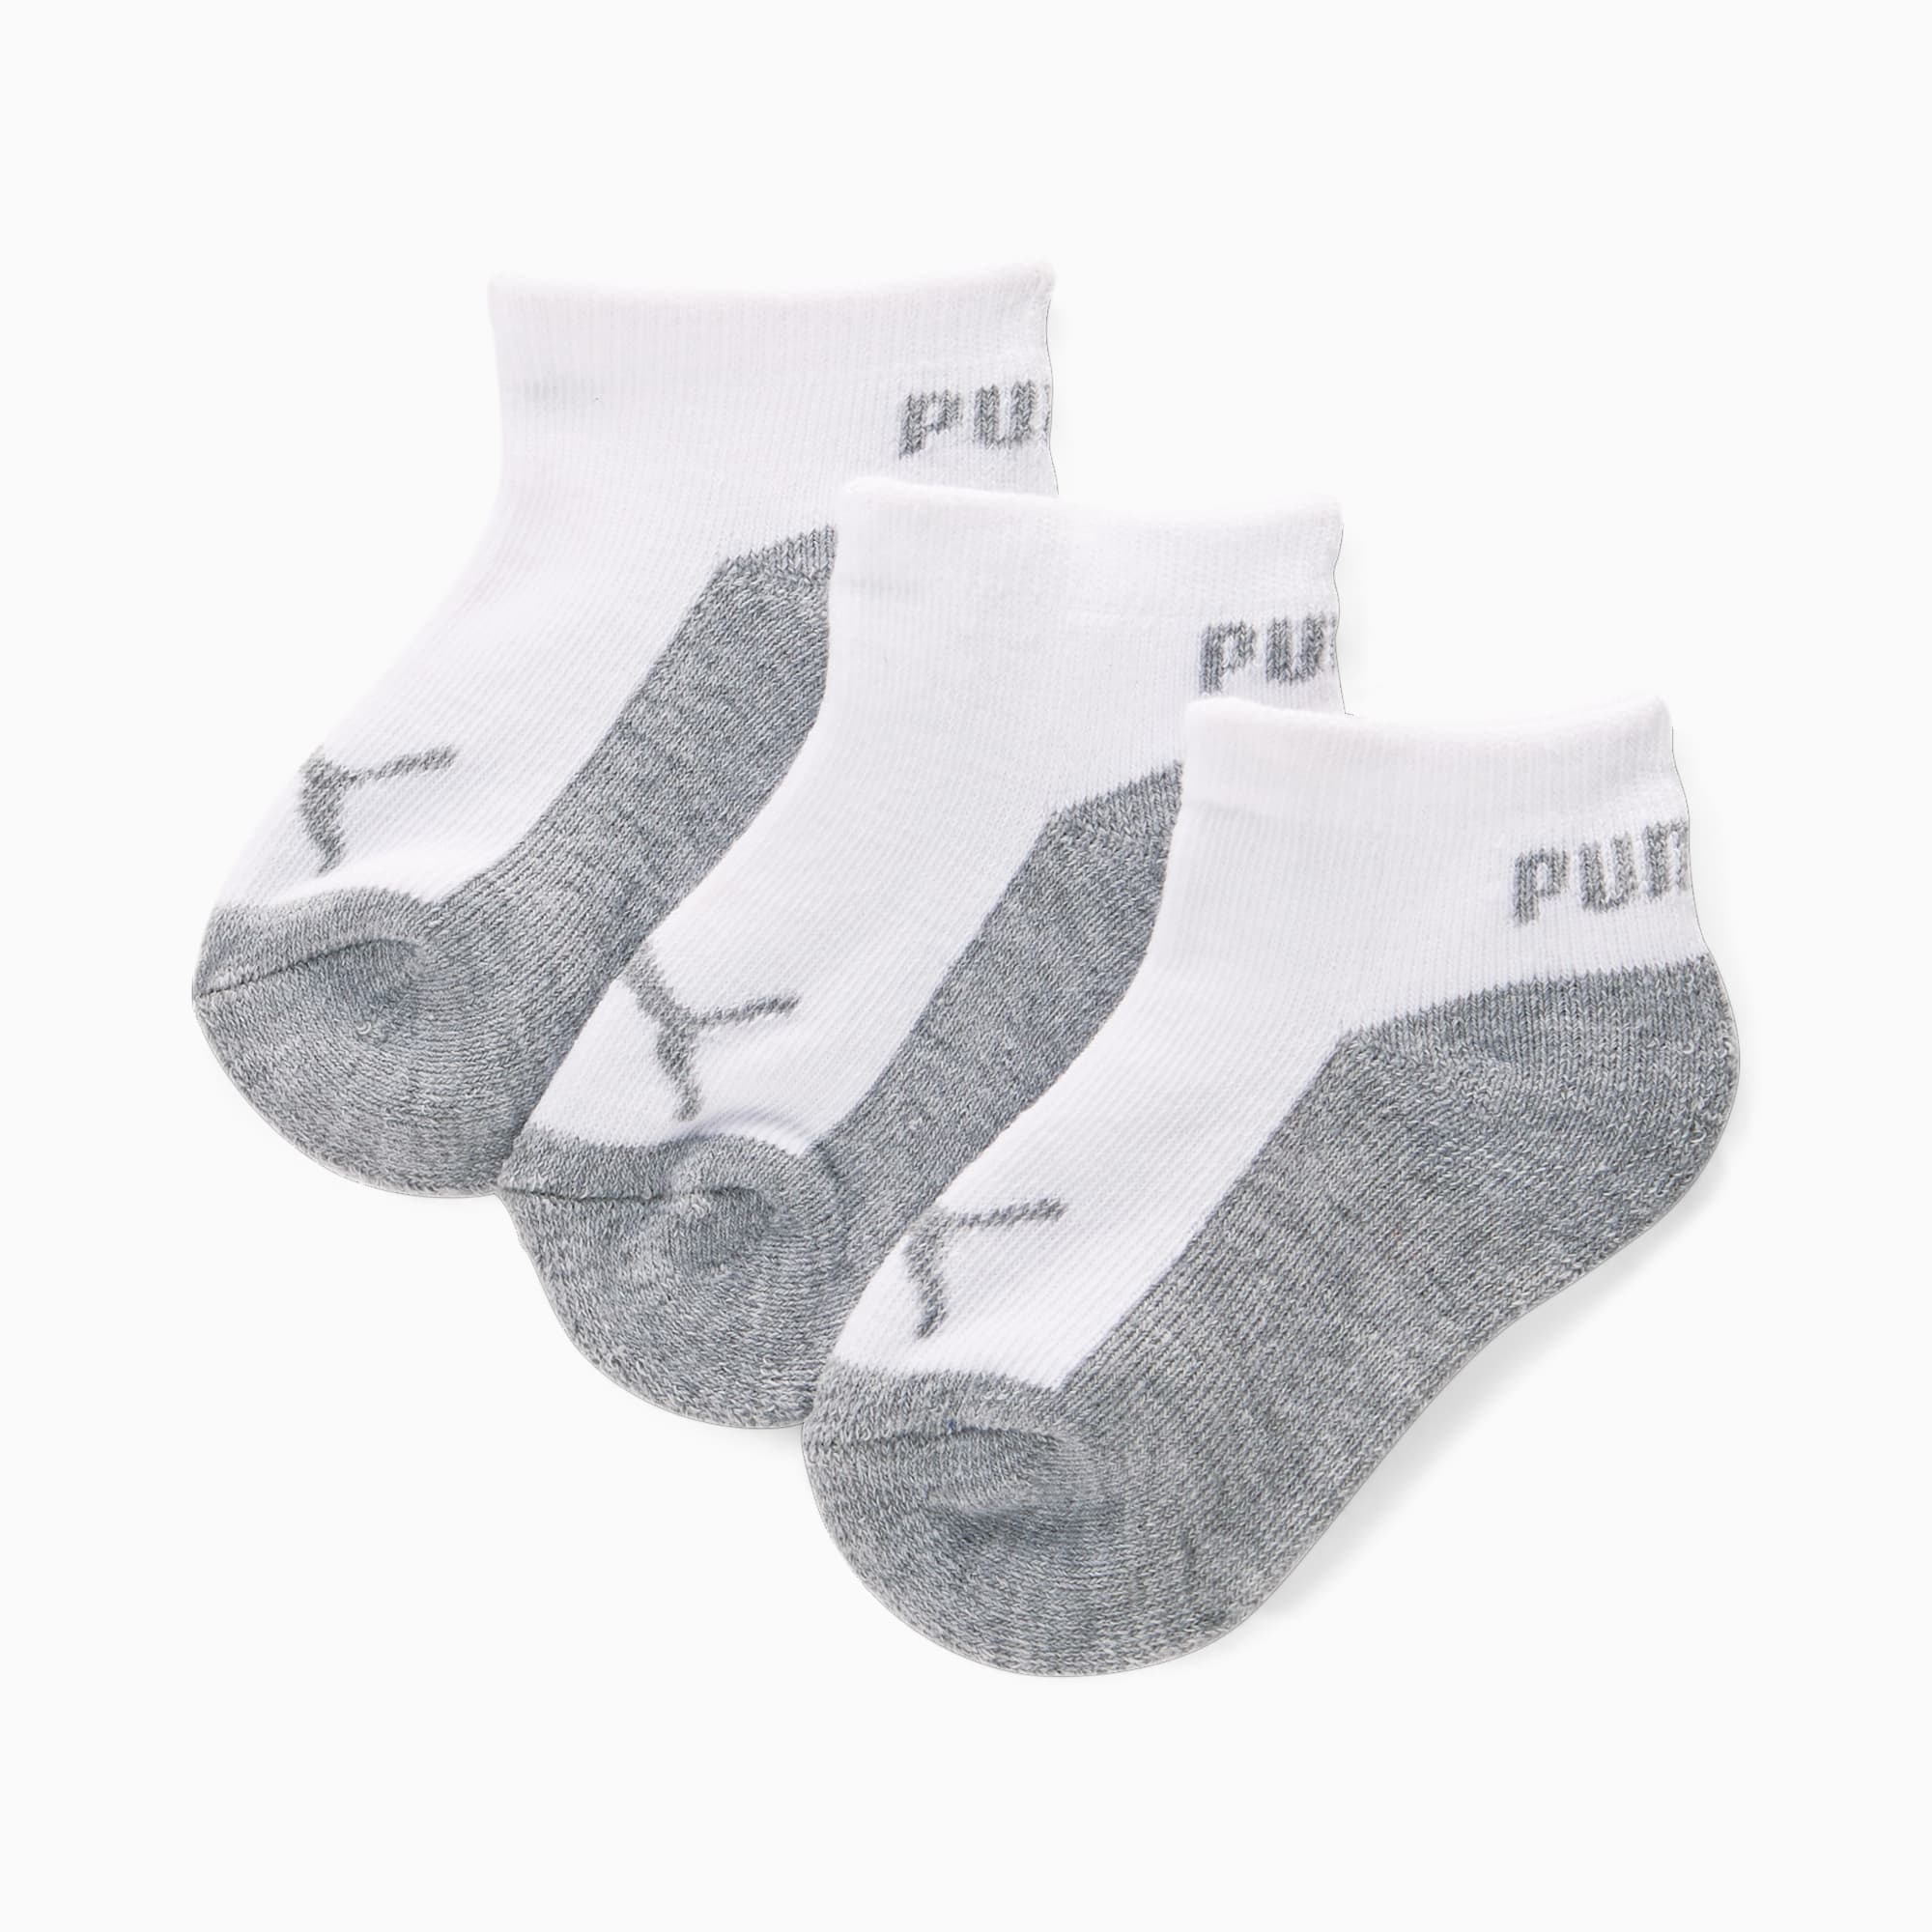 PUMA Kids' Quarter Socks Pack de 3 Pares de Calcetines Deportivos niños,  Pink Combo, 23 Regular Bebés: : Moda